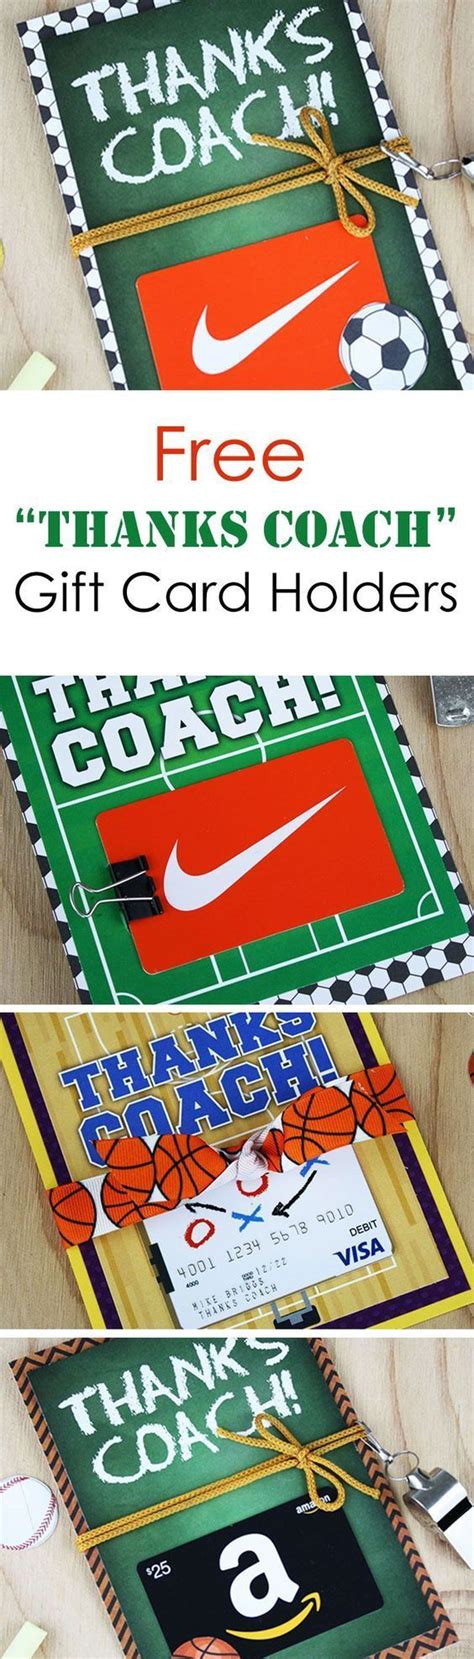 Where Can I Buy A Coach Gift Card